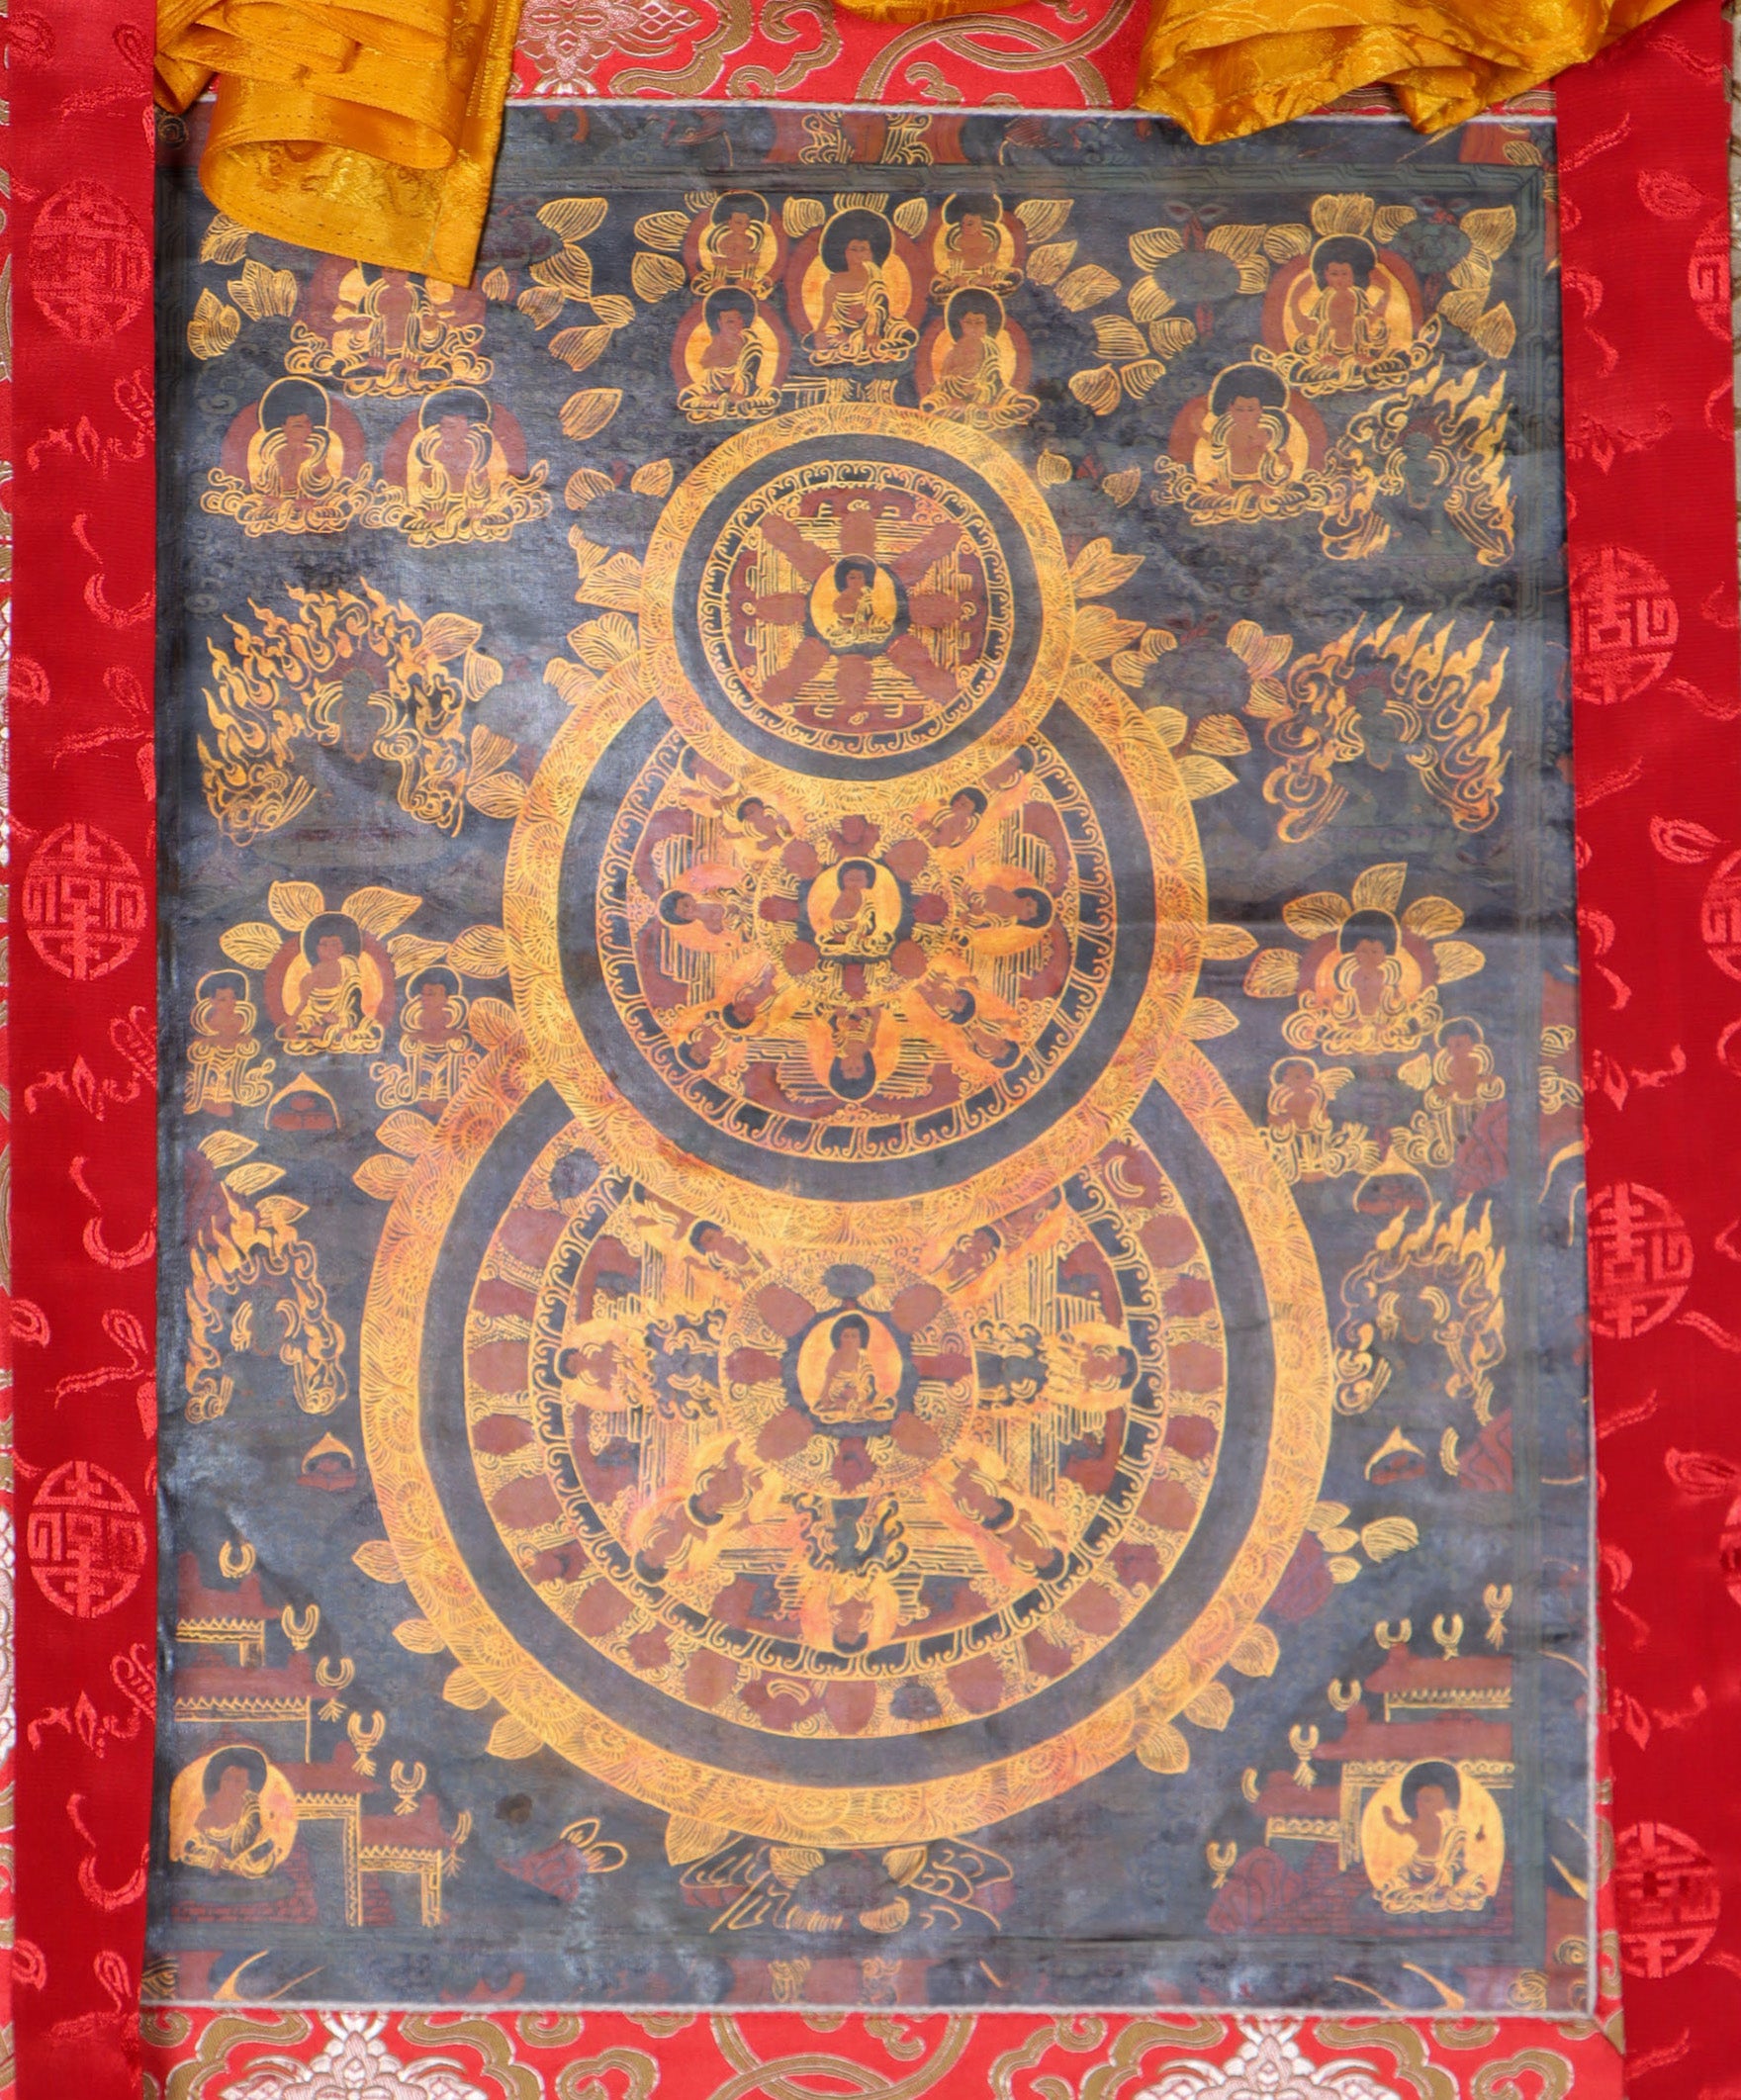 Buddha Mandala Thangka Painting for meditation and contemplation.